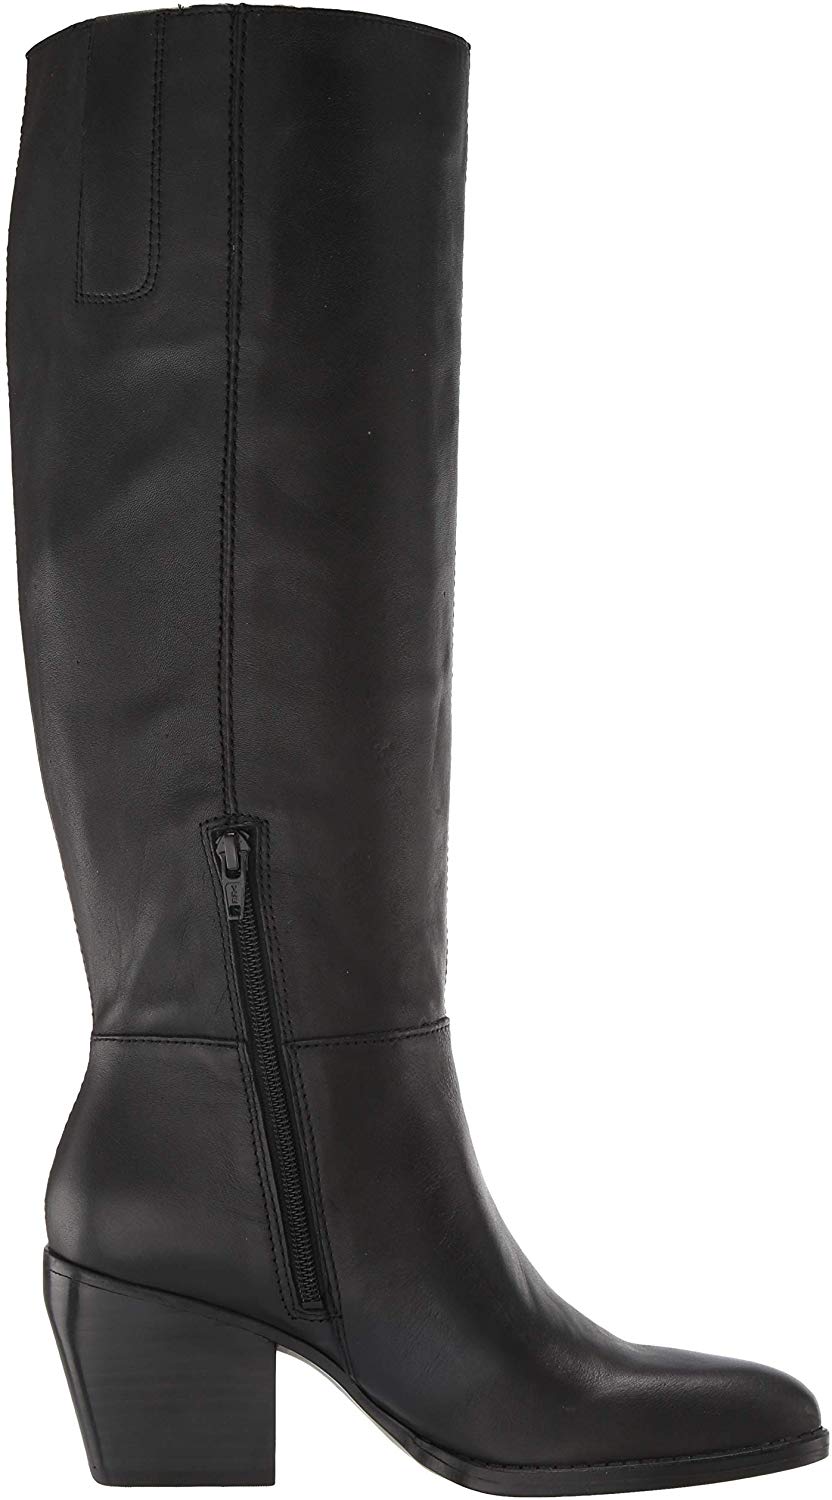 Naturalizer Women's FAE High Shaft Boots Knee, Black, Size 9.5 Etub | eBay